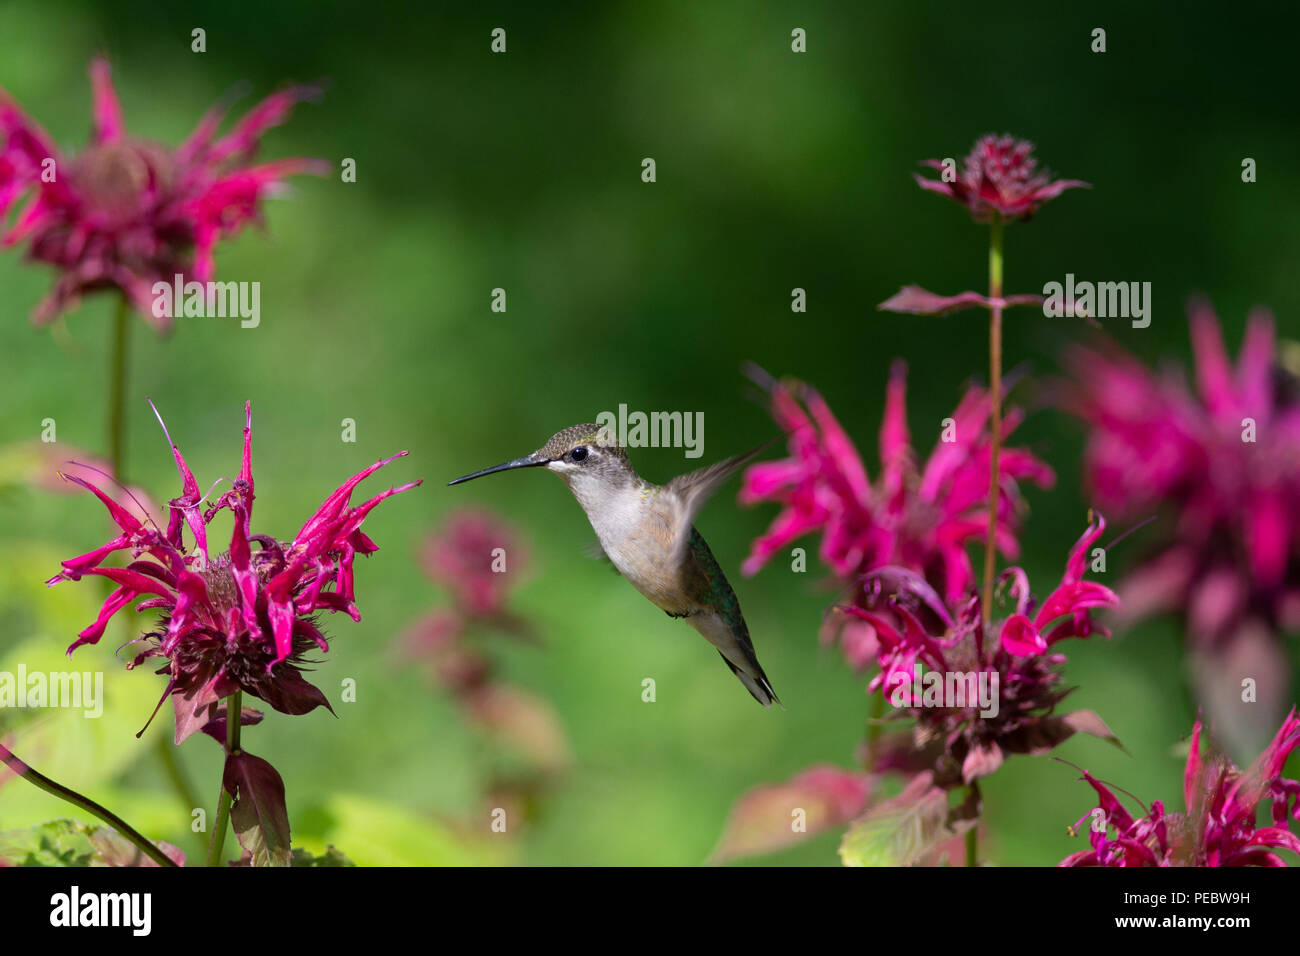 A Ruby-throated hummingbird flying near Bee Balm Flowers Stock Photo